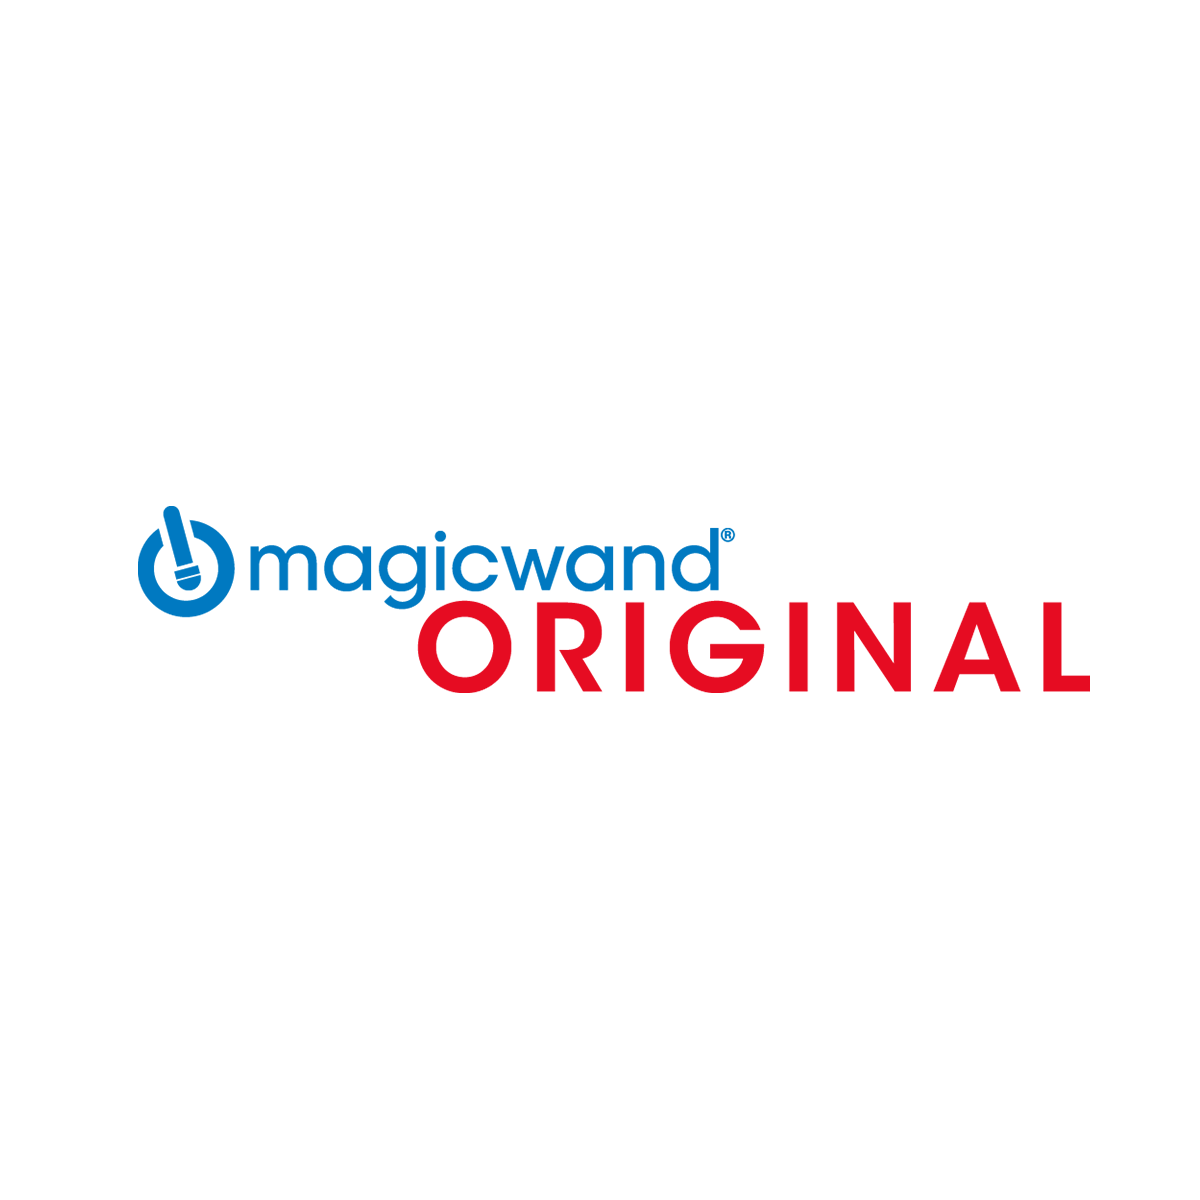 magic wand original logo